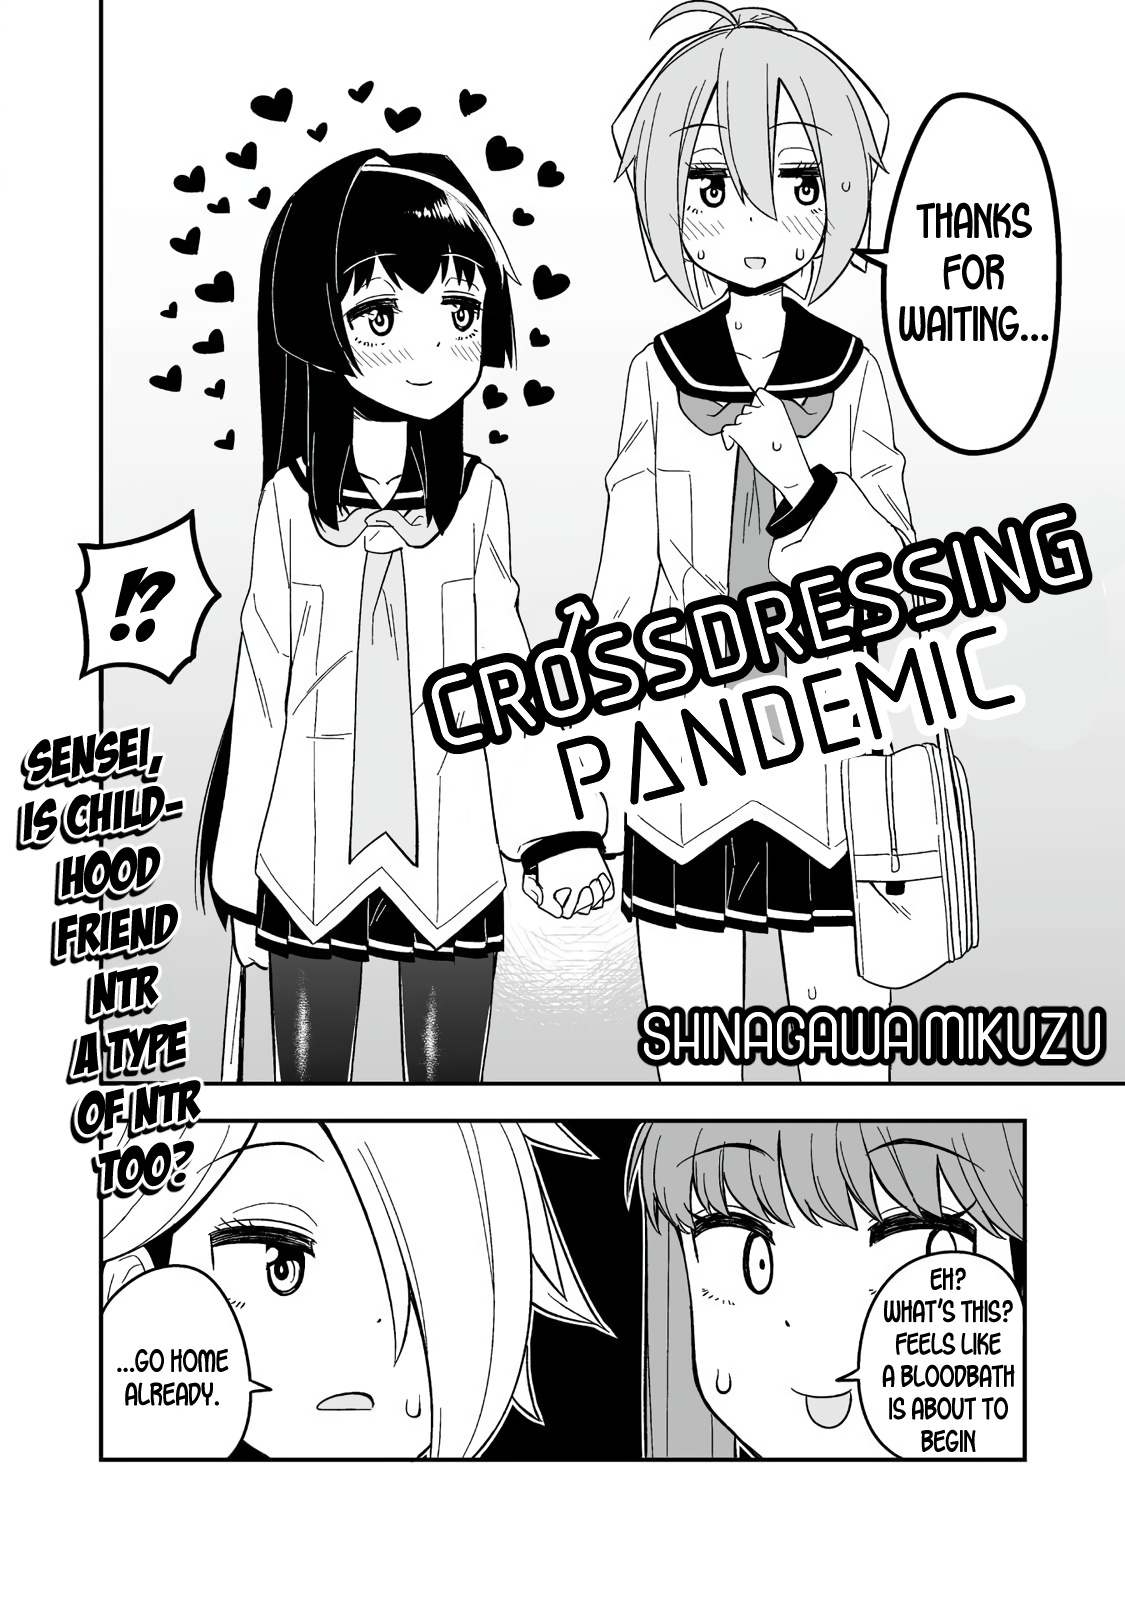 Crossdressing Pandemic - Page 2